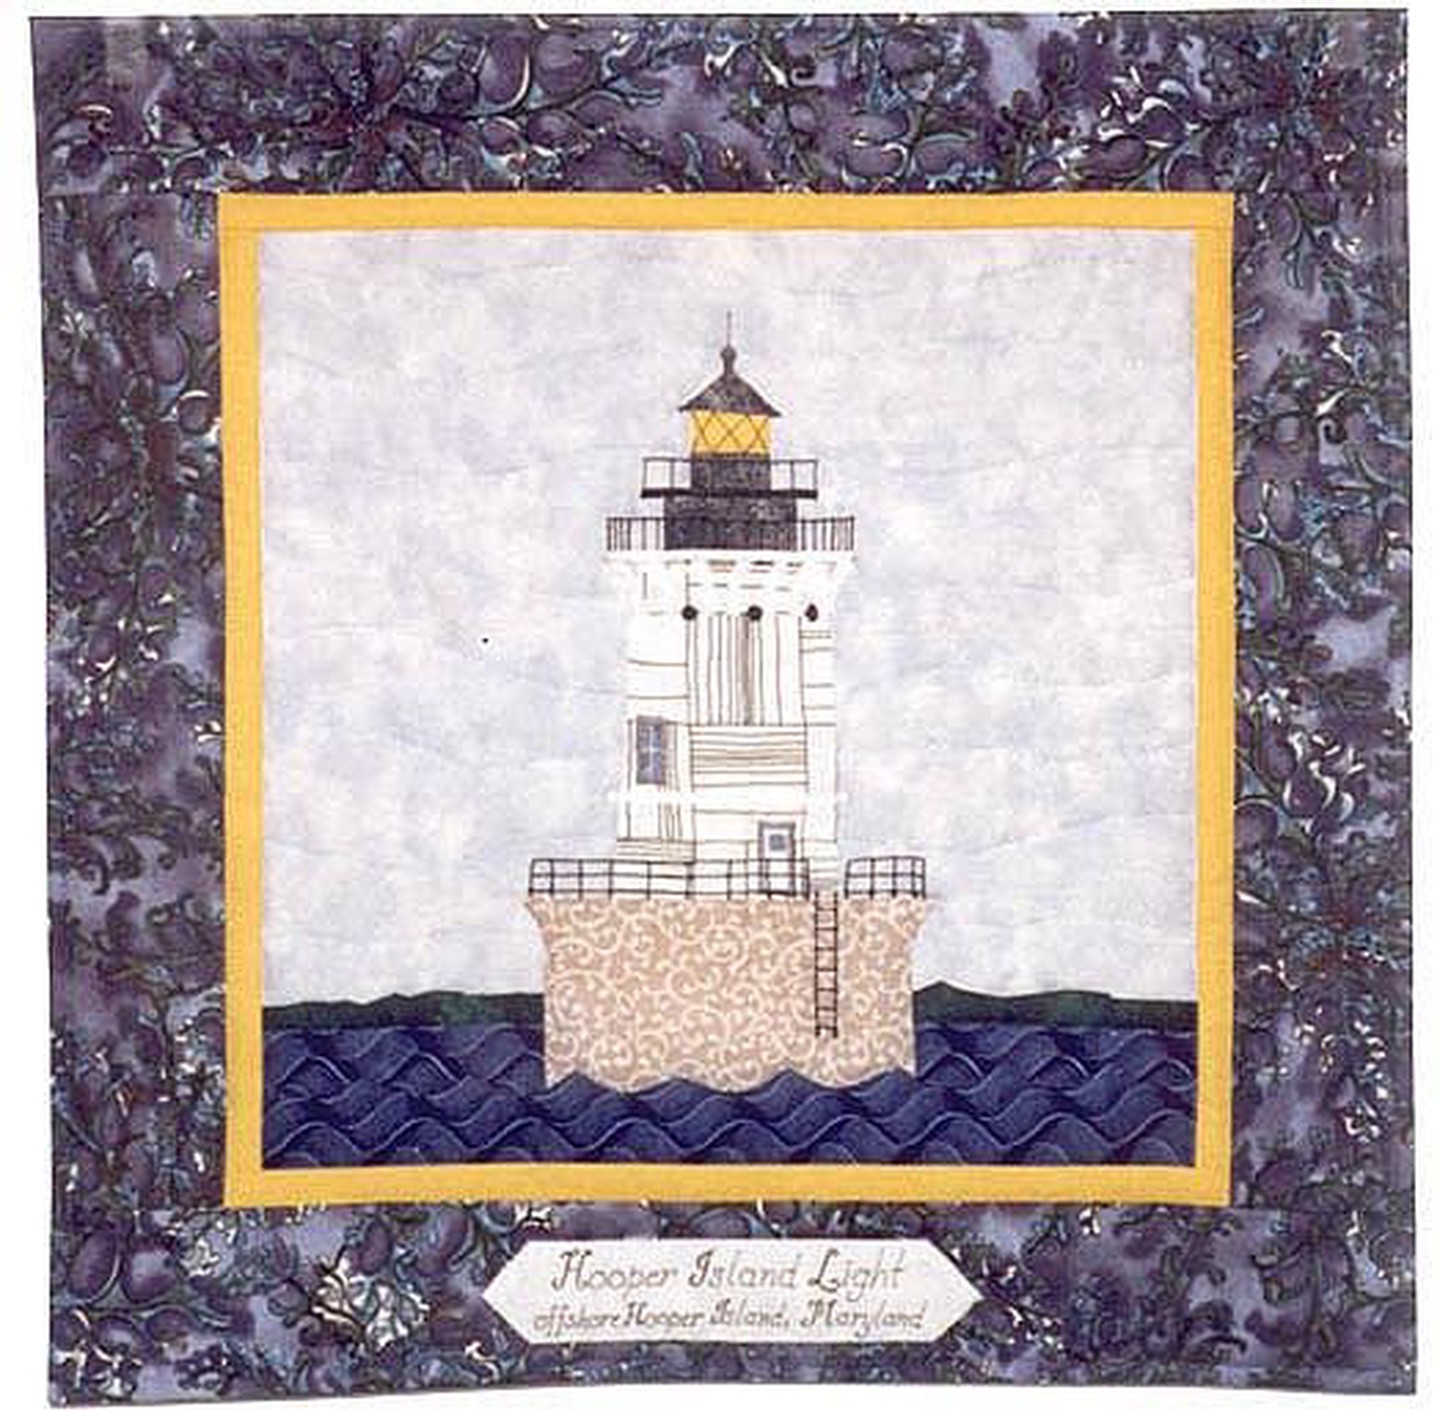 Hooper Island Lighthouse, Maryland